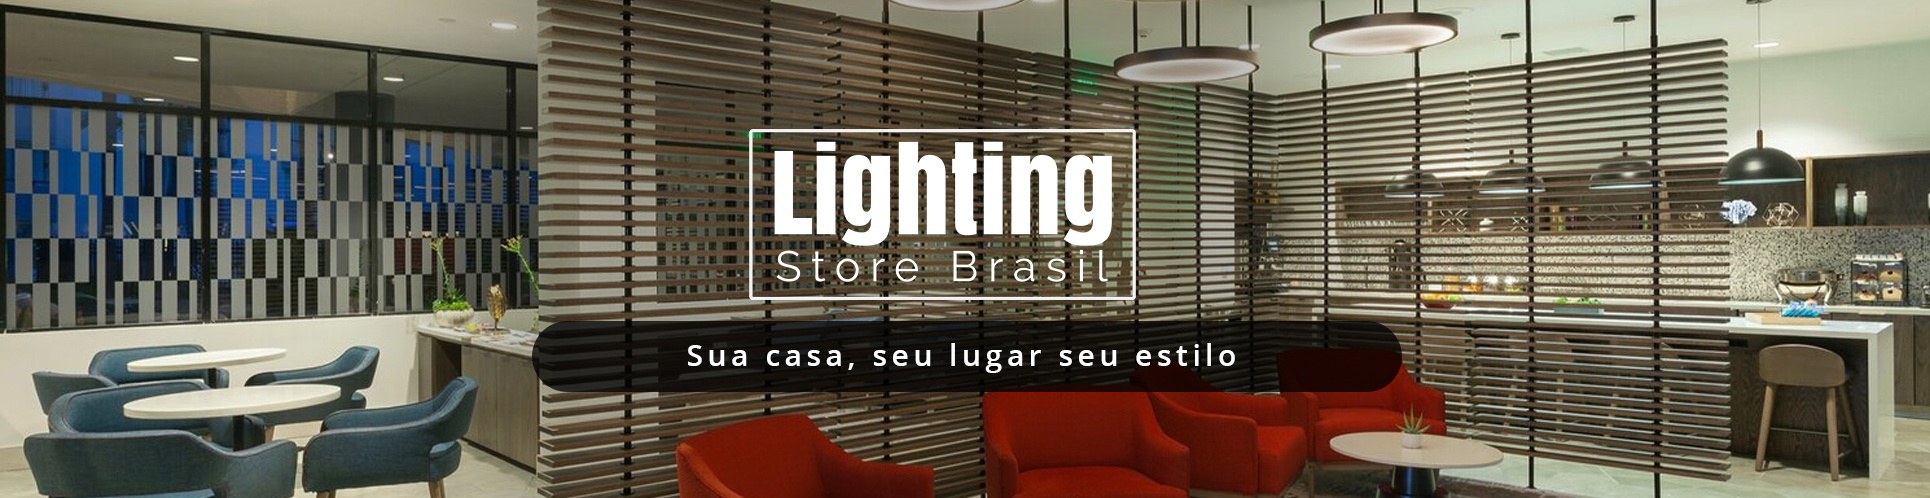 Lighting Store Brasil Arandelas Parede